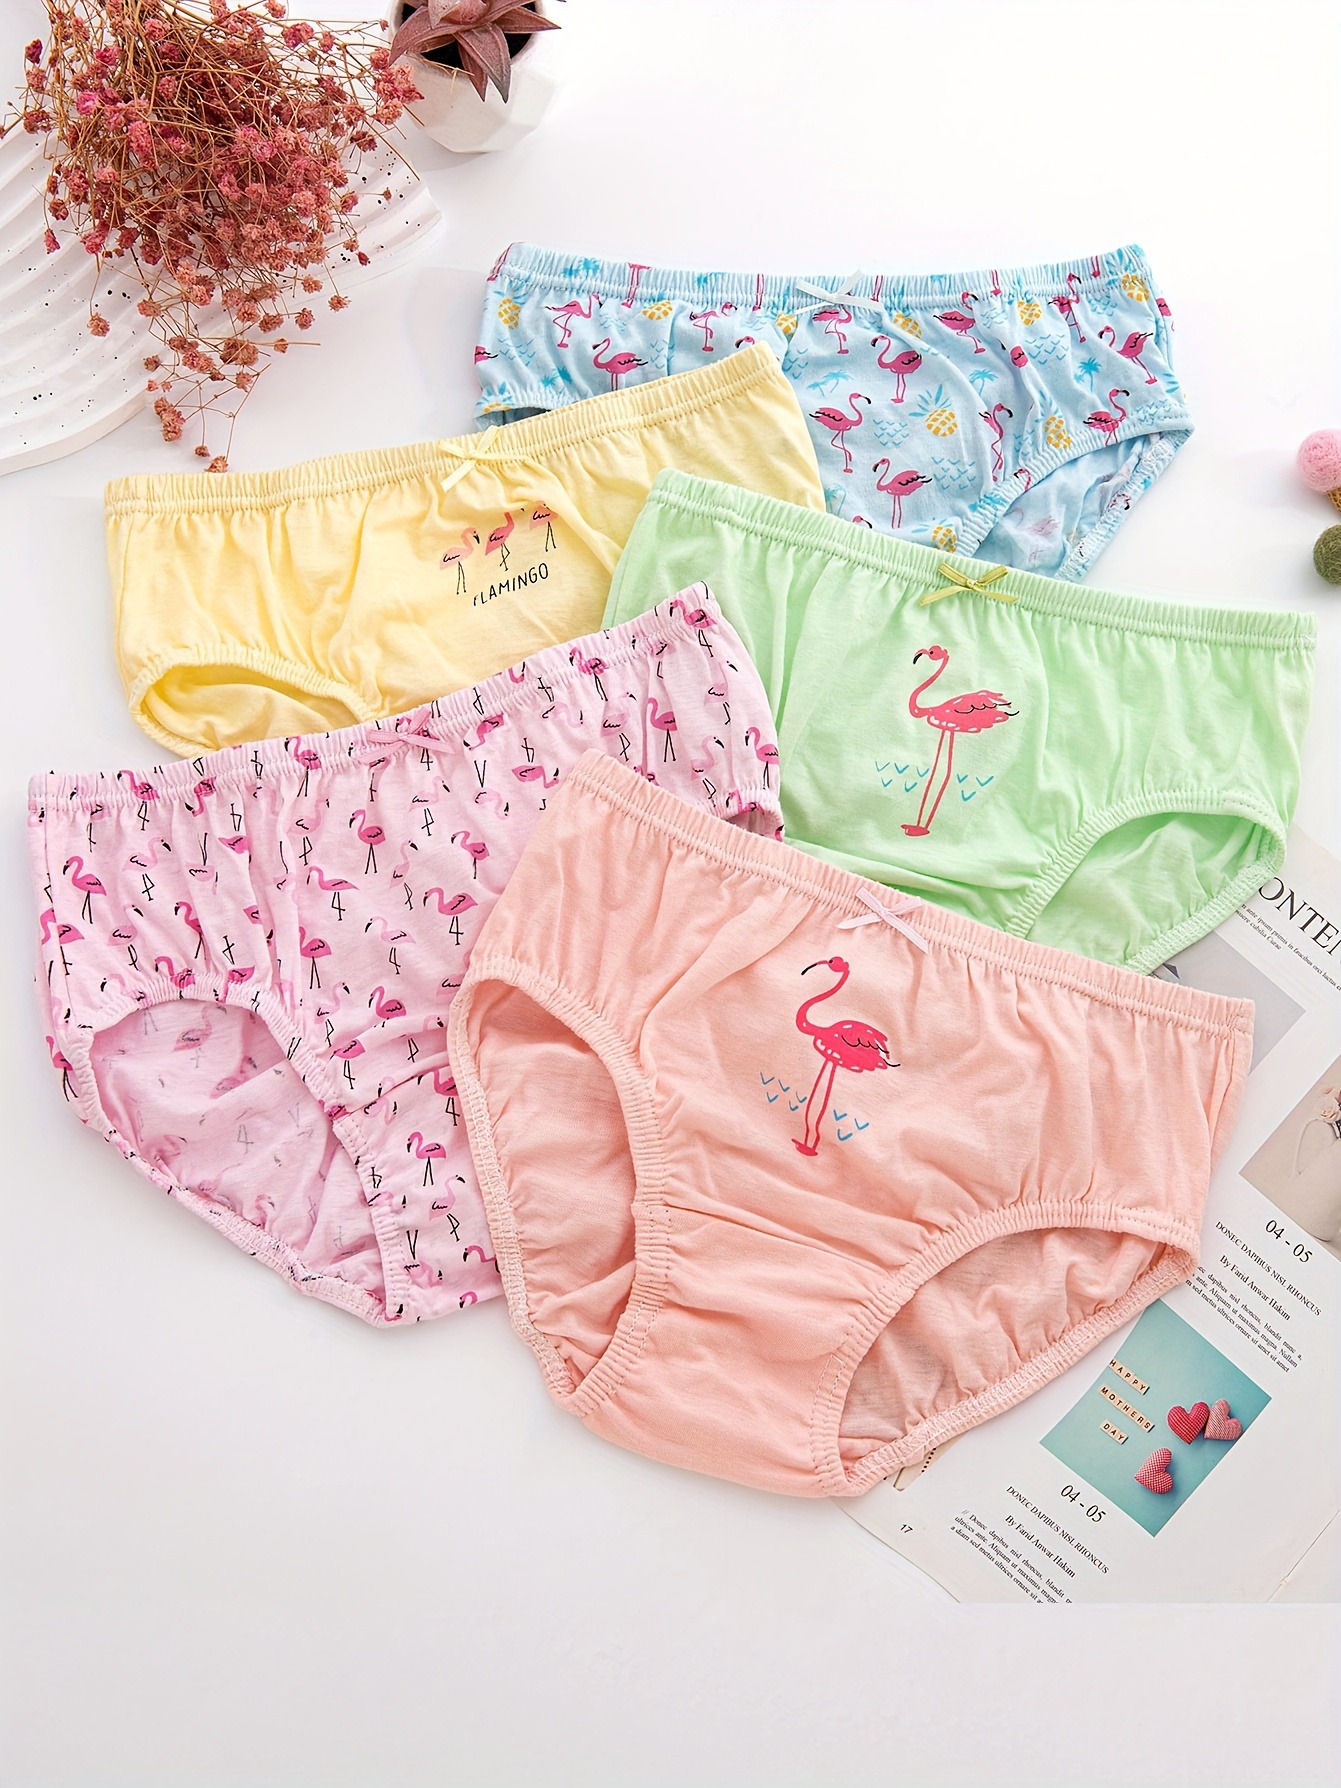 NEW 6-Pack Breathable Cotton Girls' Underwear Briefs Set for Kids (2T-6T)